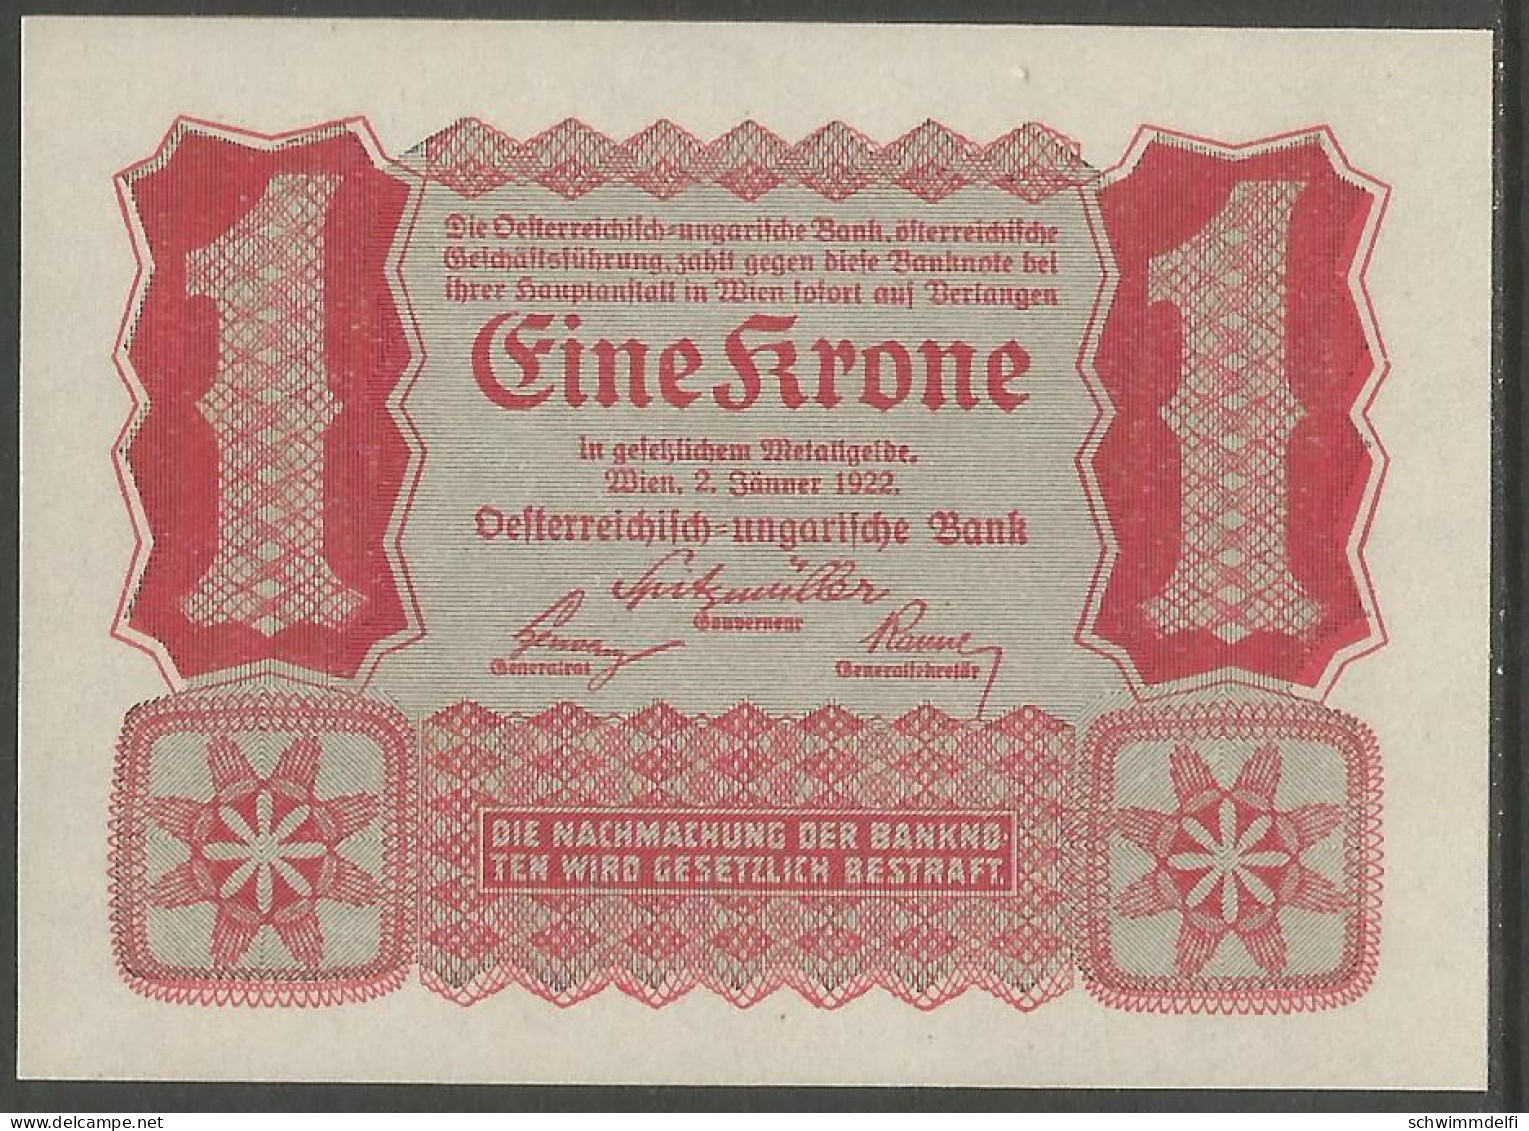 OESTERREICH - AUSTRIA - 1 CORONA 1922 - BILLETE DEL BANCO AUSTRIA - HUNGRÍA - VIENNA , 02. JAENNER 1922 - SIN CIRCULAR - Oesterreich